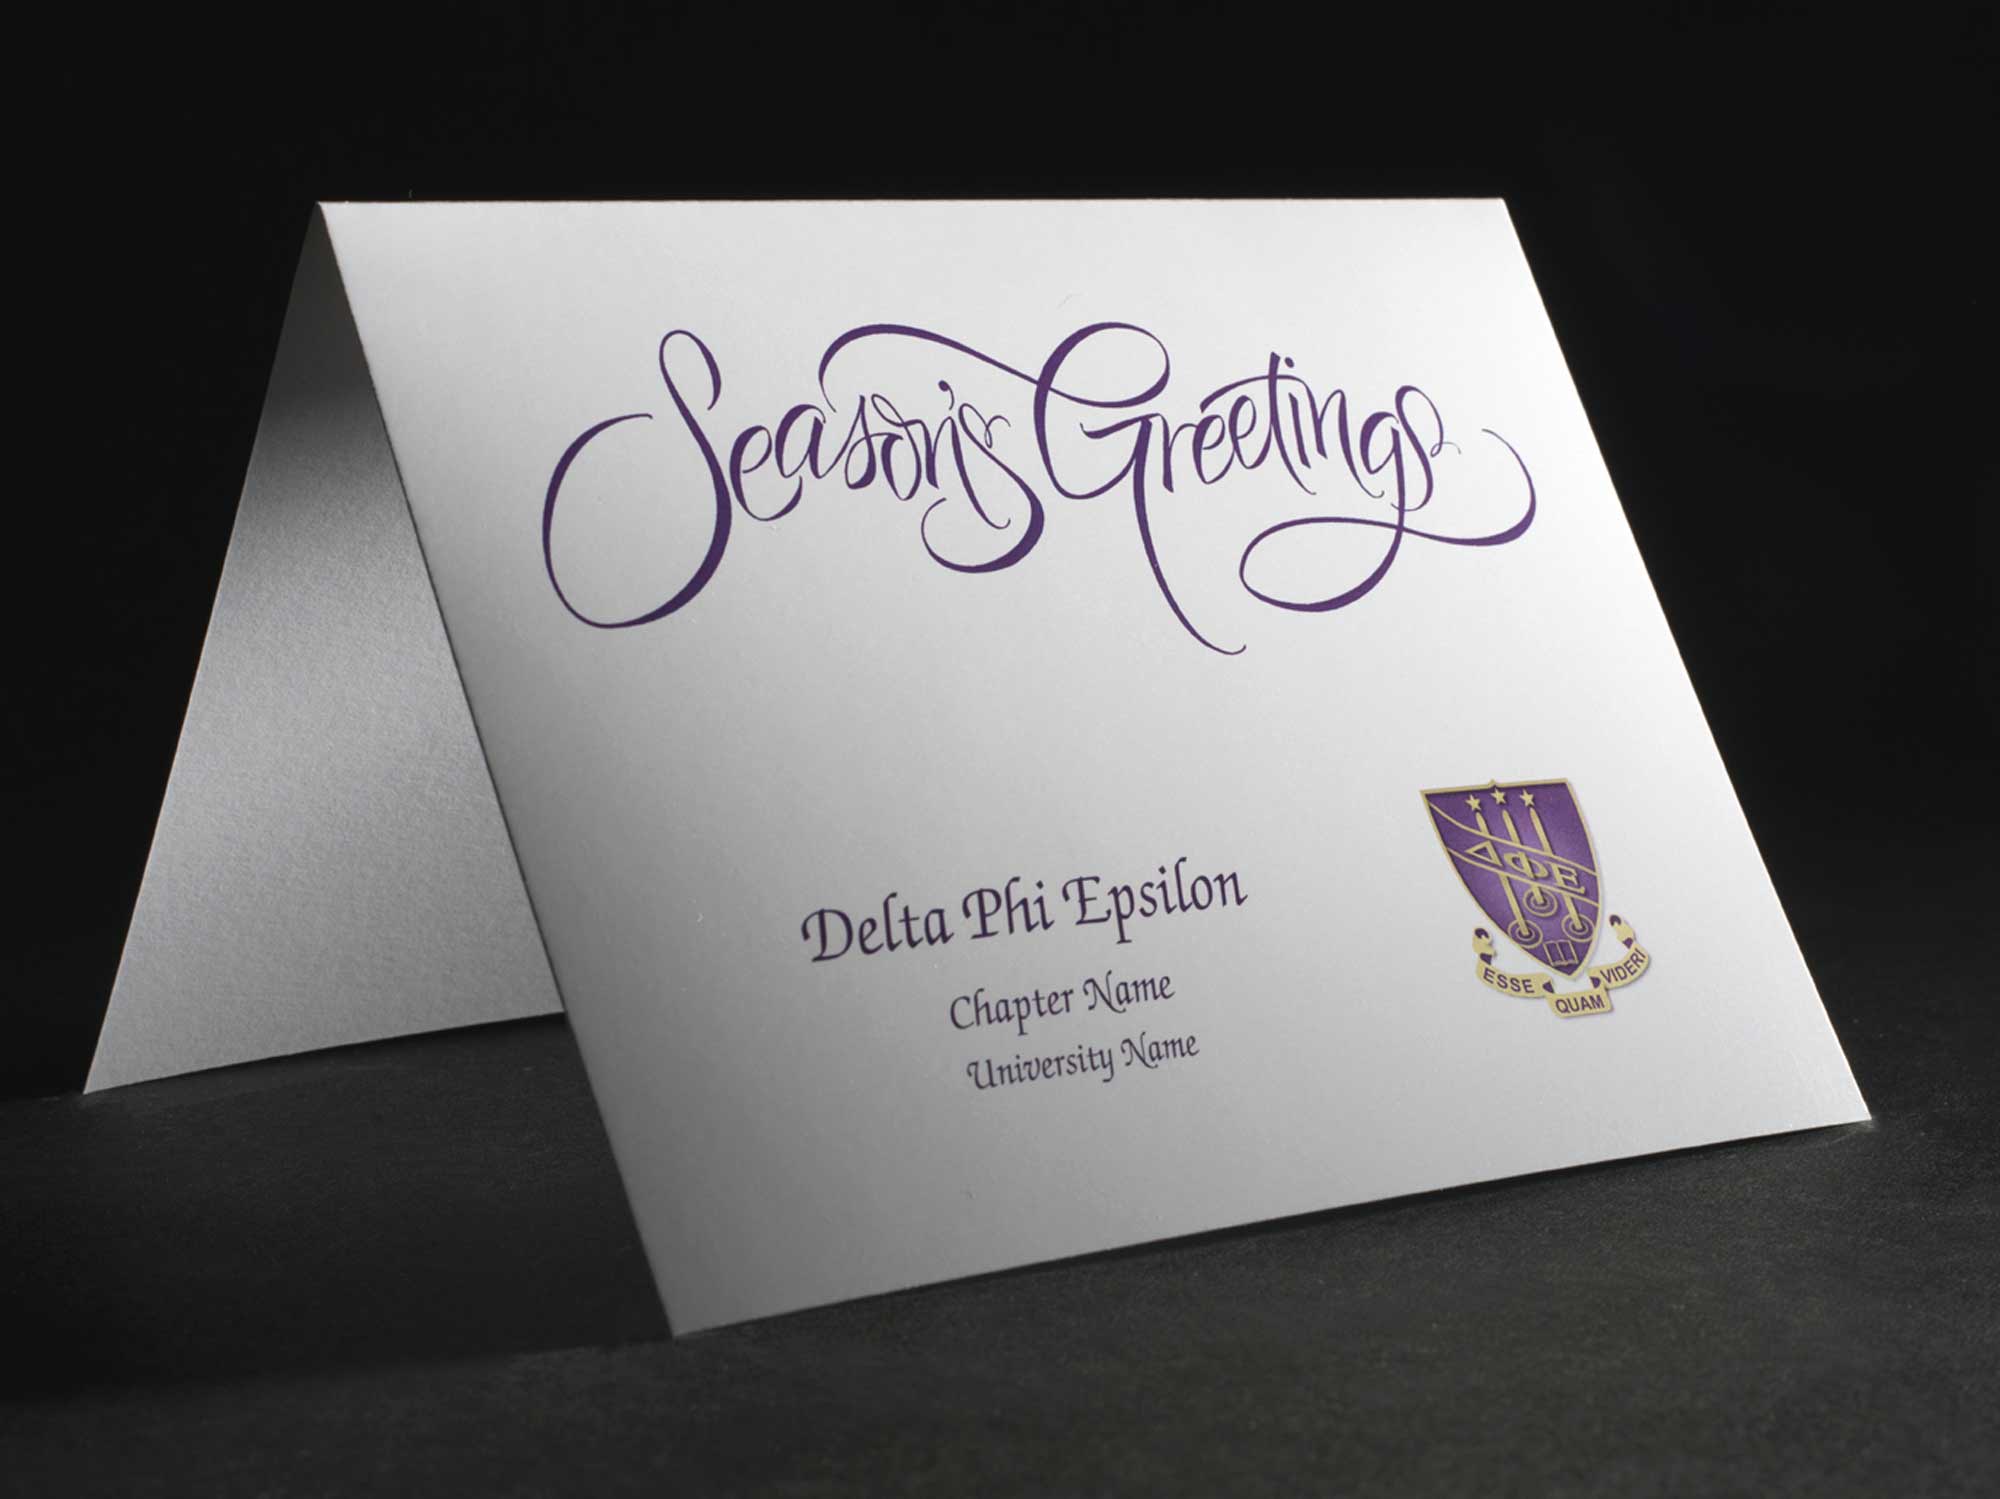 Seasons Greetings Cards Delta Phi Epsilon